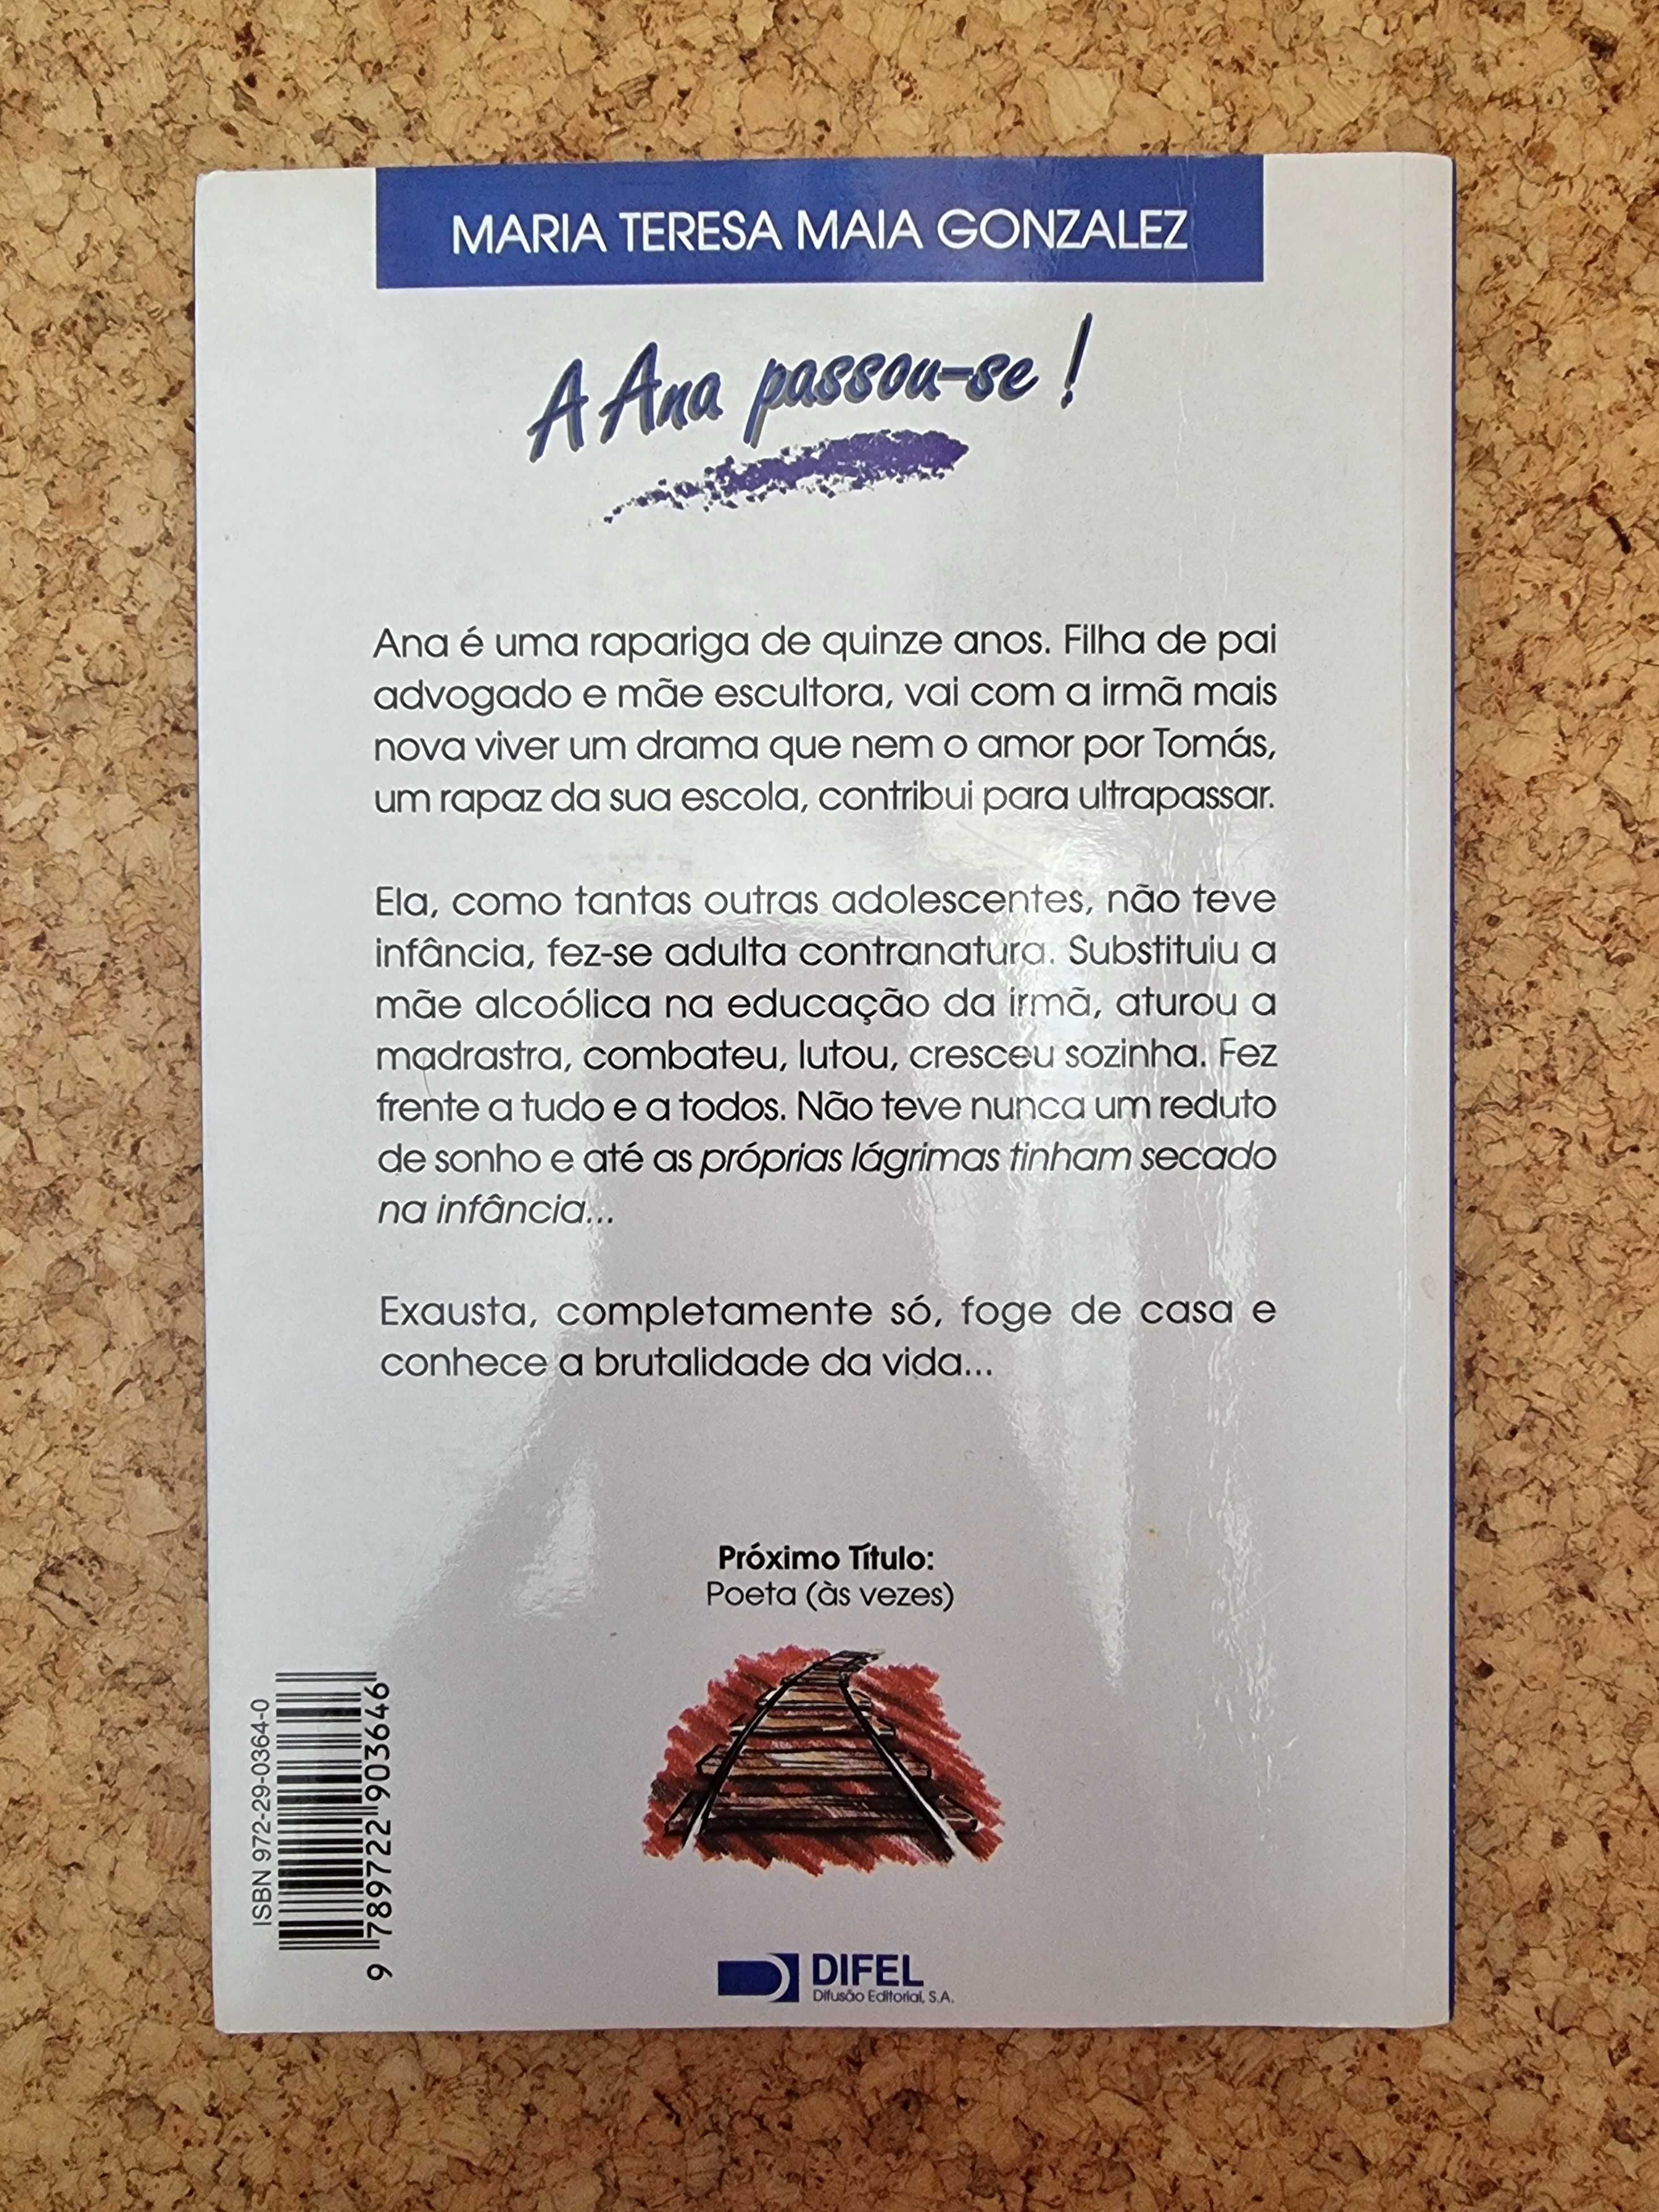 Livro "A Ana Passou-se!" de Maria Teresa Maia Gonzalez